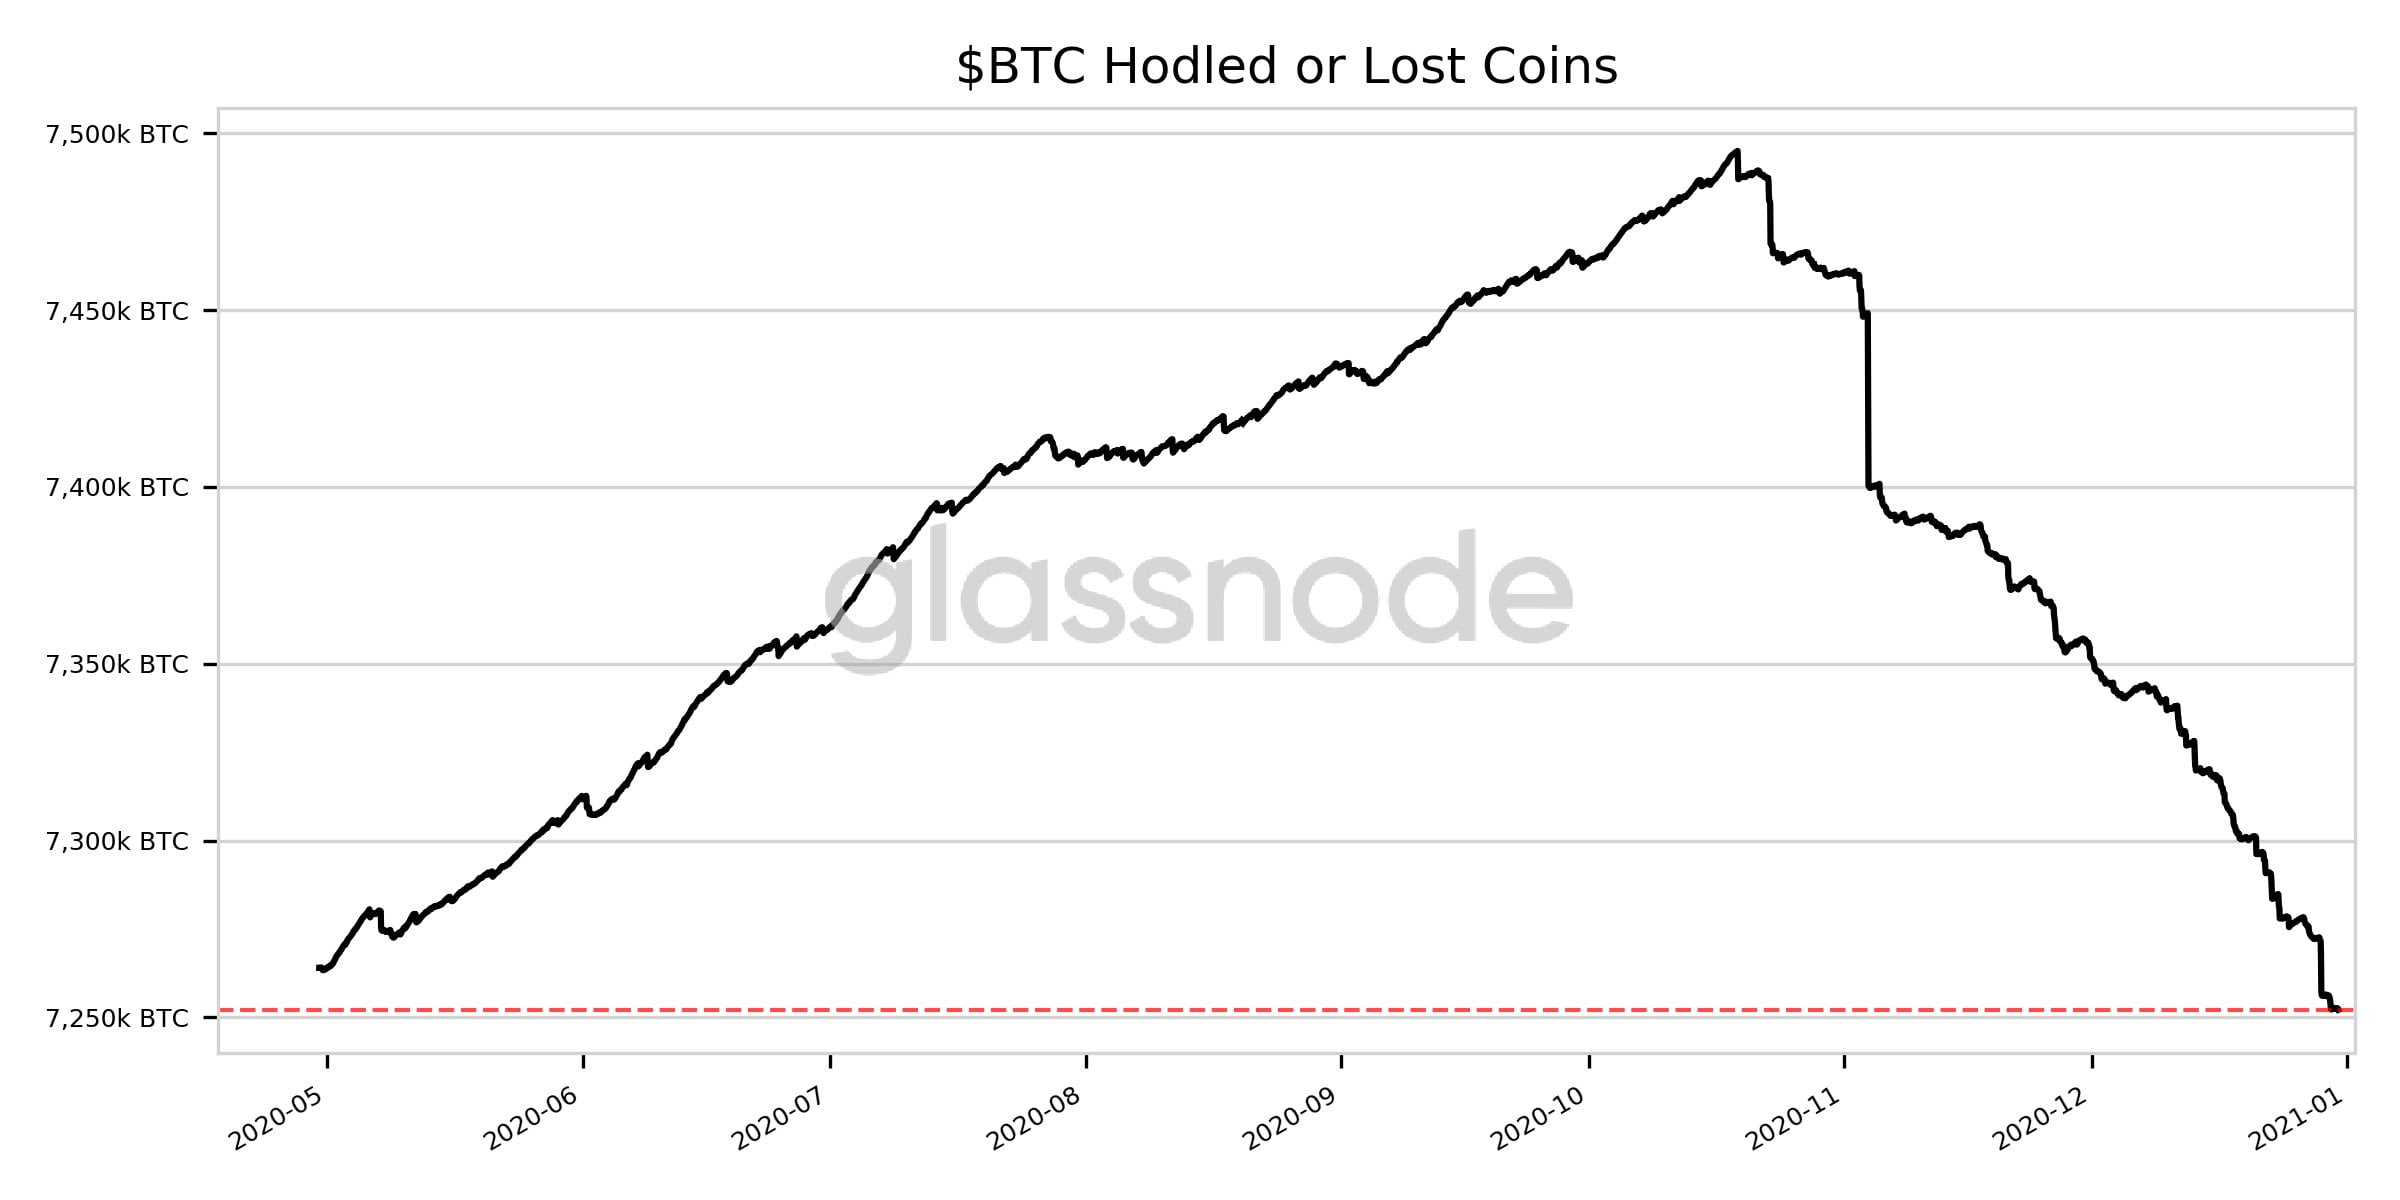 bitcoin-btc-glassnode-hodl-lost